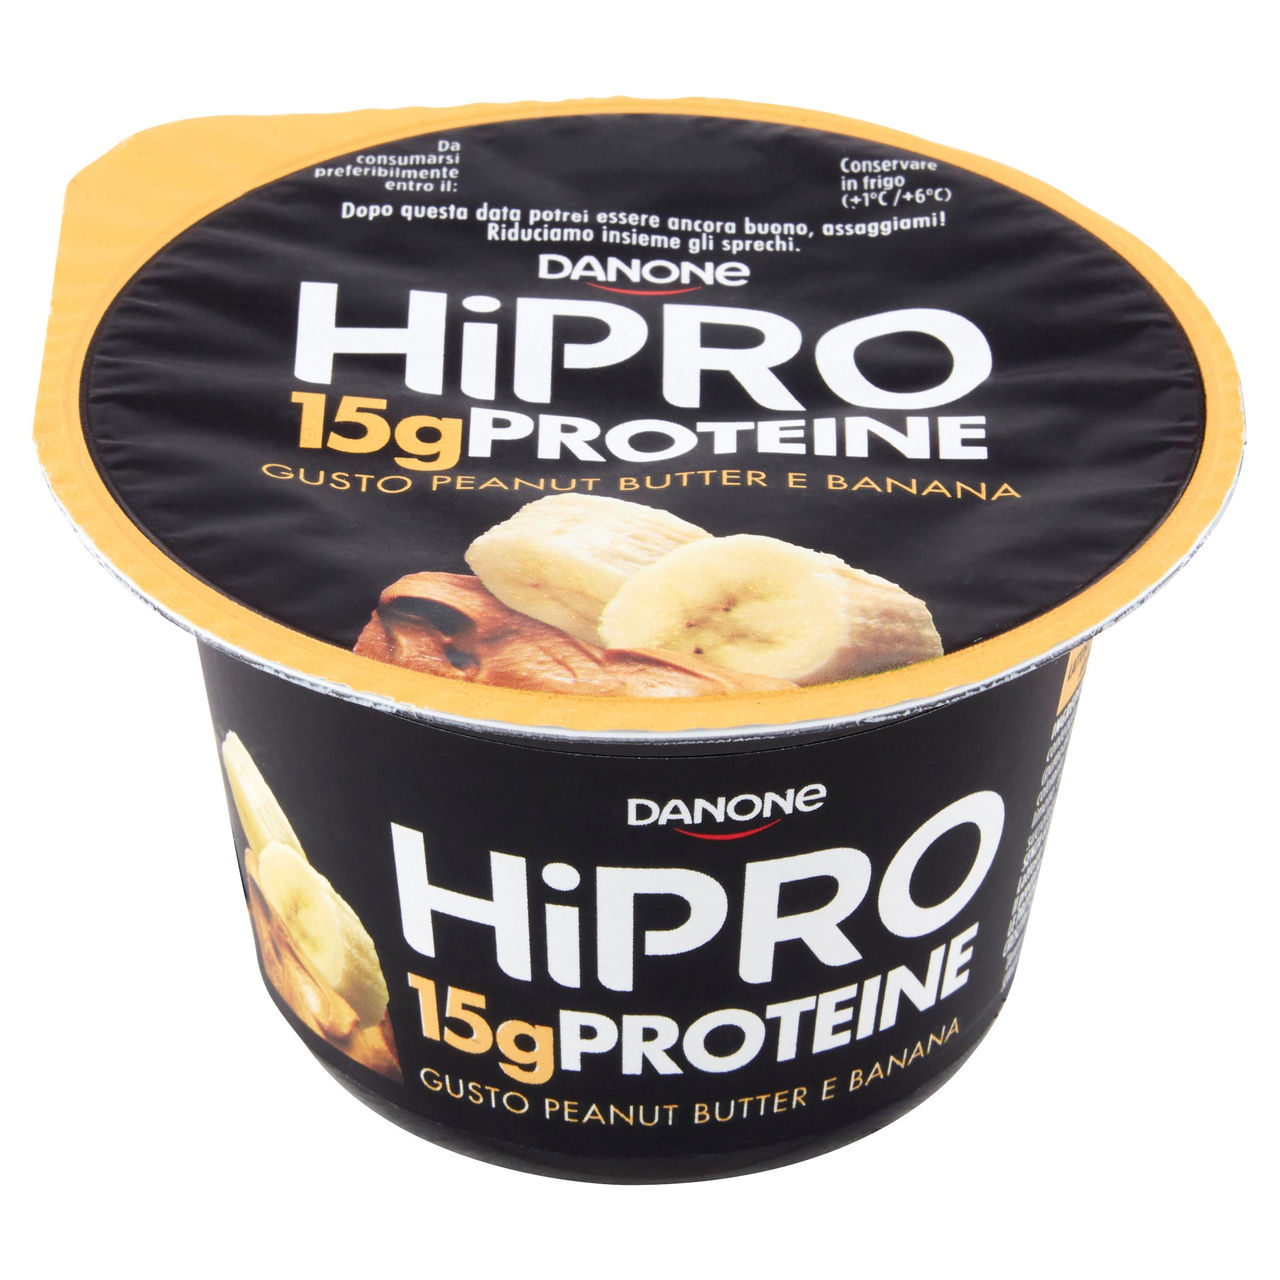 HiPRO 15g Proteine Gusto Peanut Butter e Banana 160 g